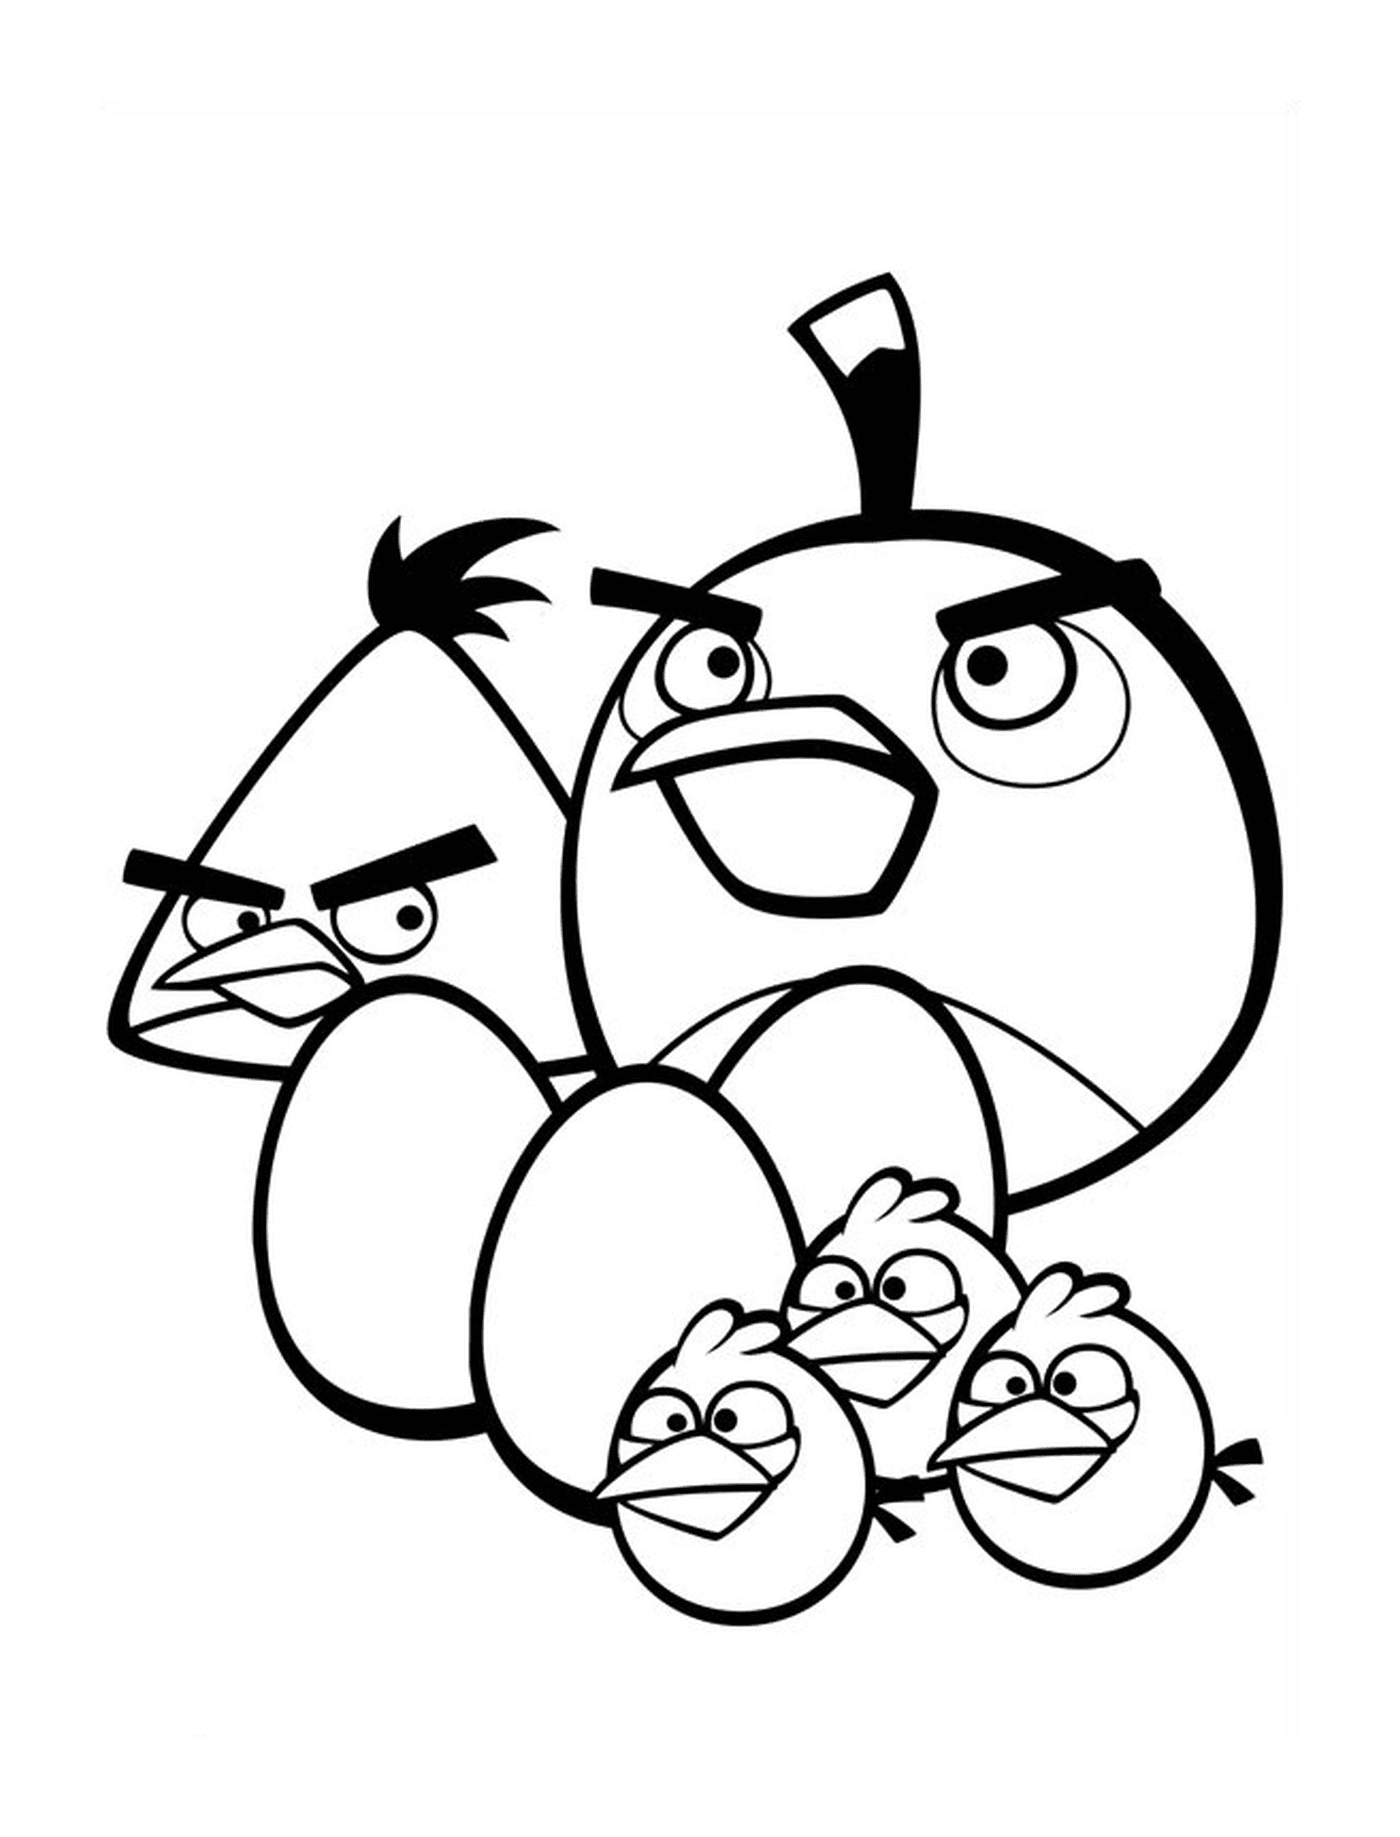  Angry Birds - Small family of birds 